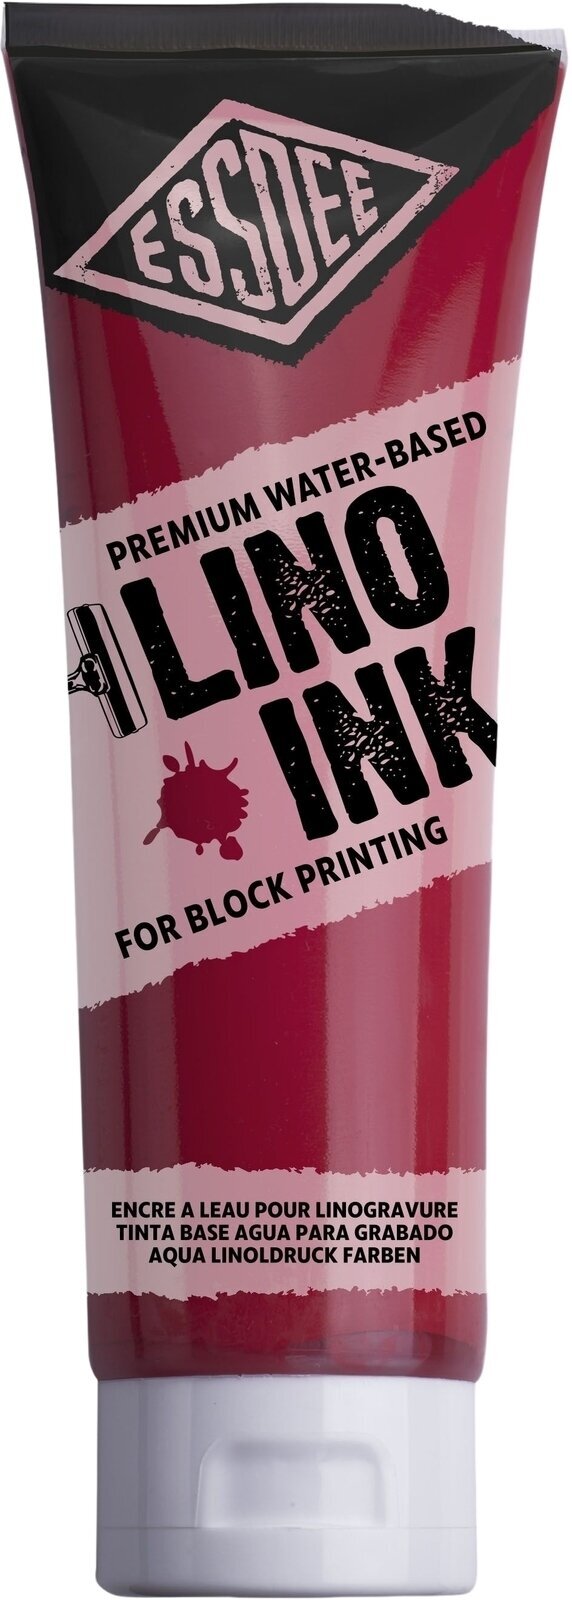 Tinta para linogravura Essdee Block Printing Ink Tinta para linogravura Brilliant Red (Scarlet) 300 ml